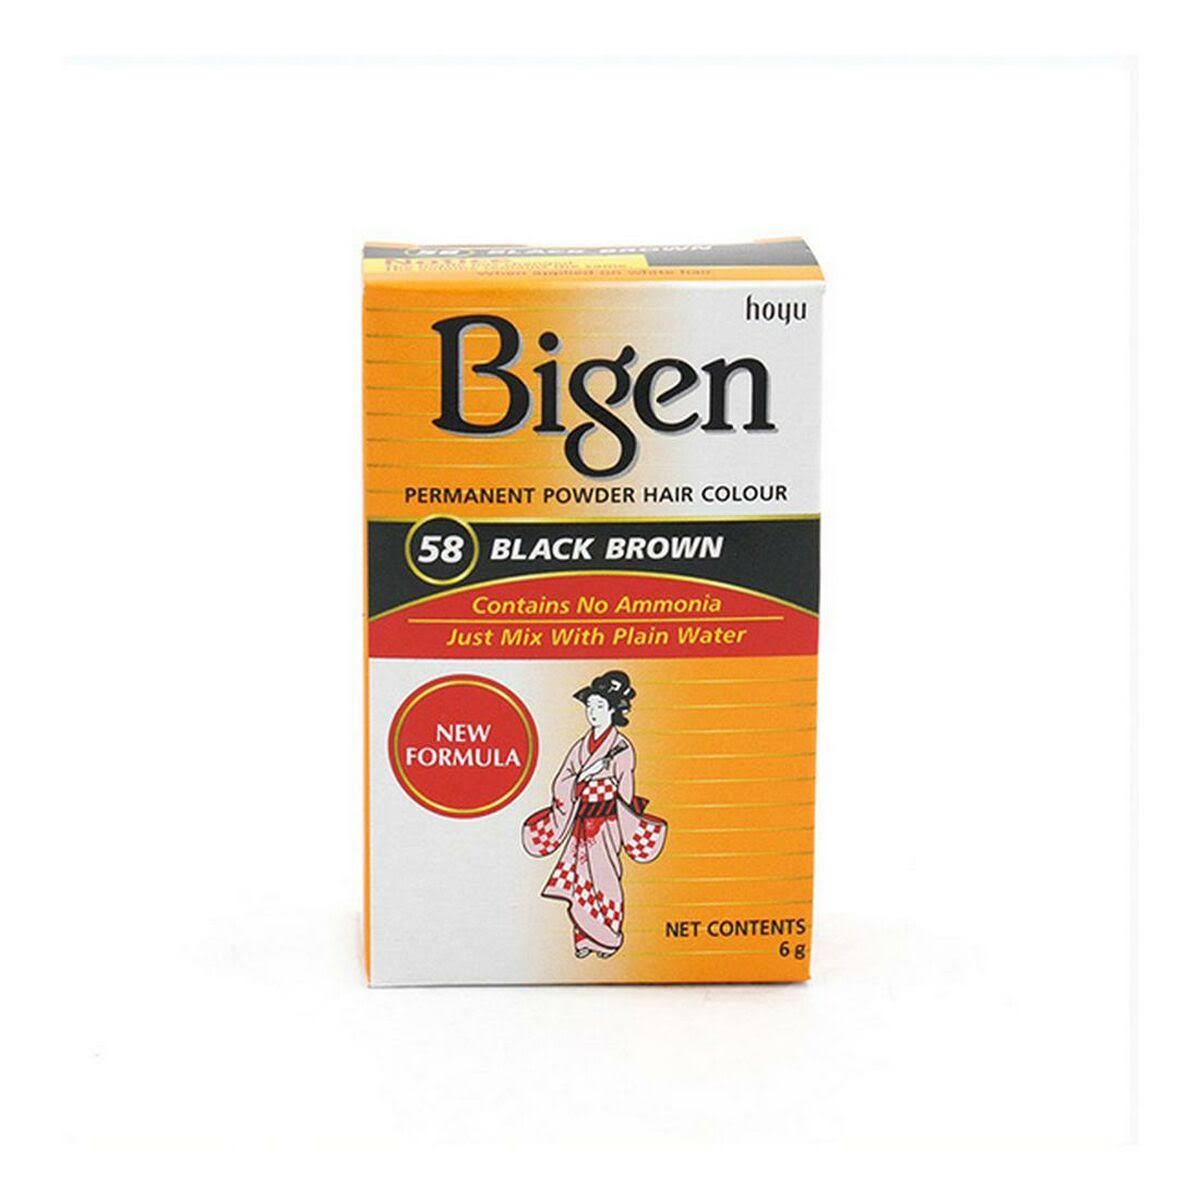 Bigen Permanent Powder Hair Colour - 58 Black Brown, 6g